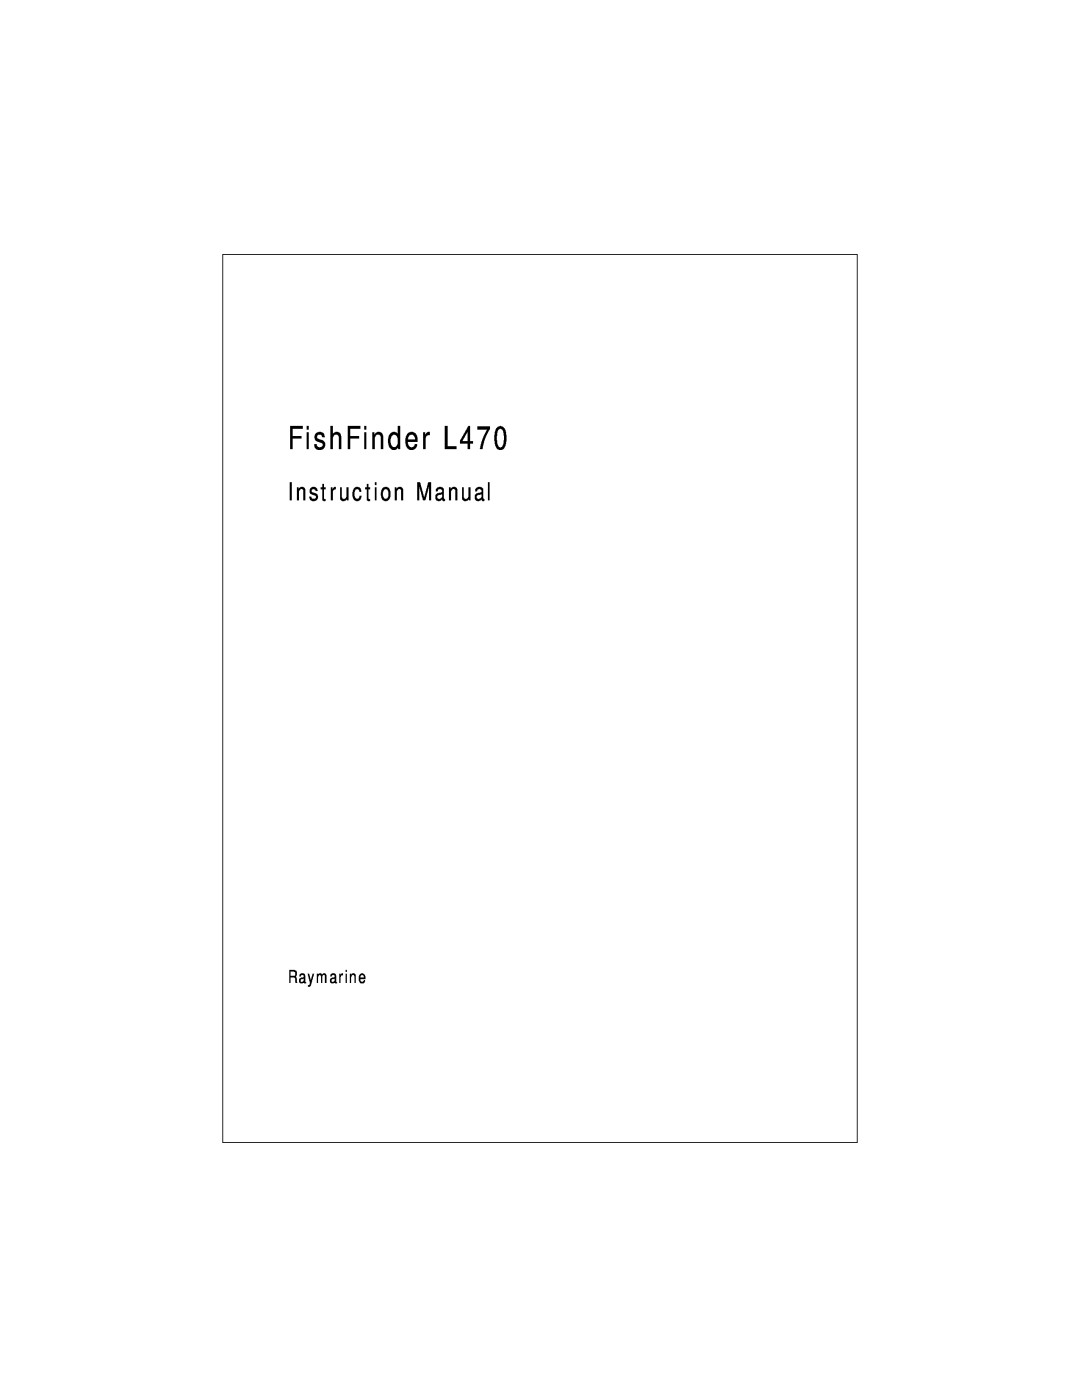 Raymarine instruction manual Instruction Manual, Raymarine, FishFinder L470 